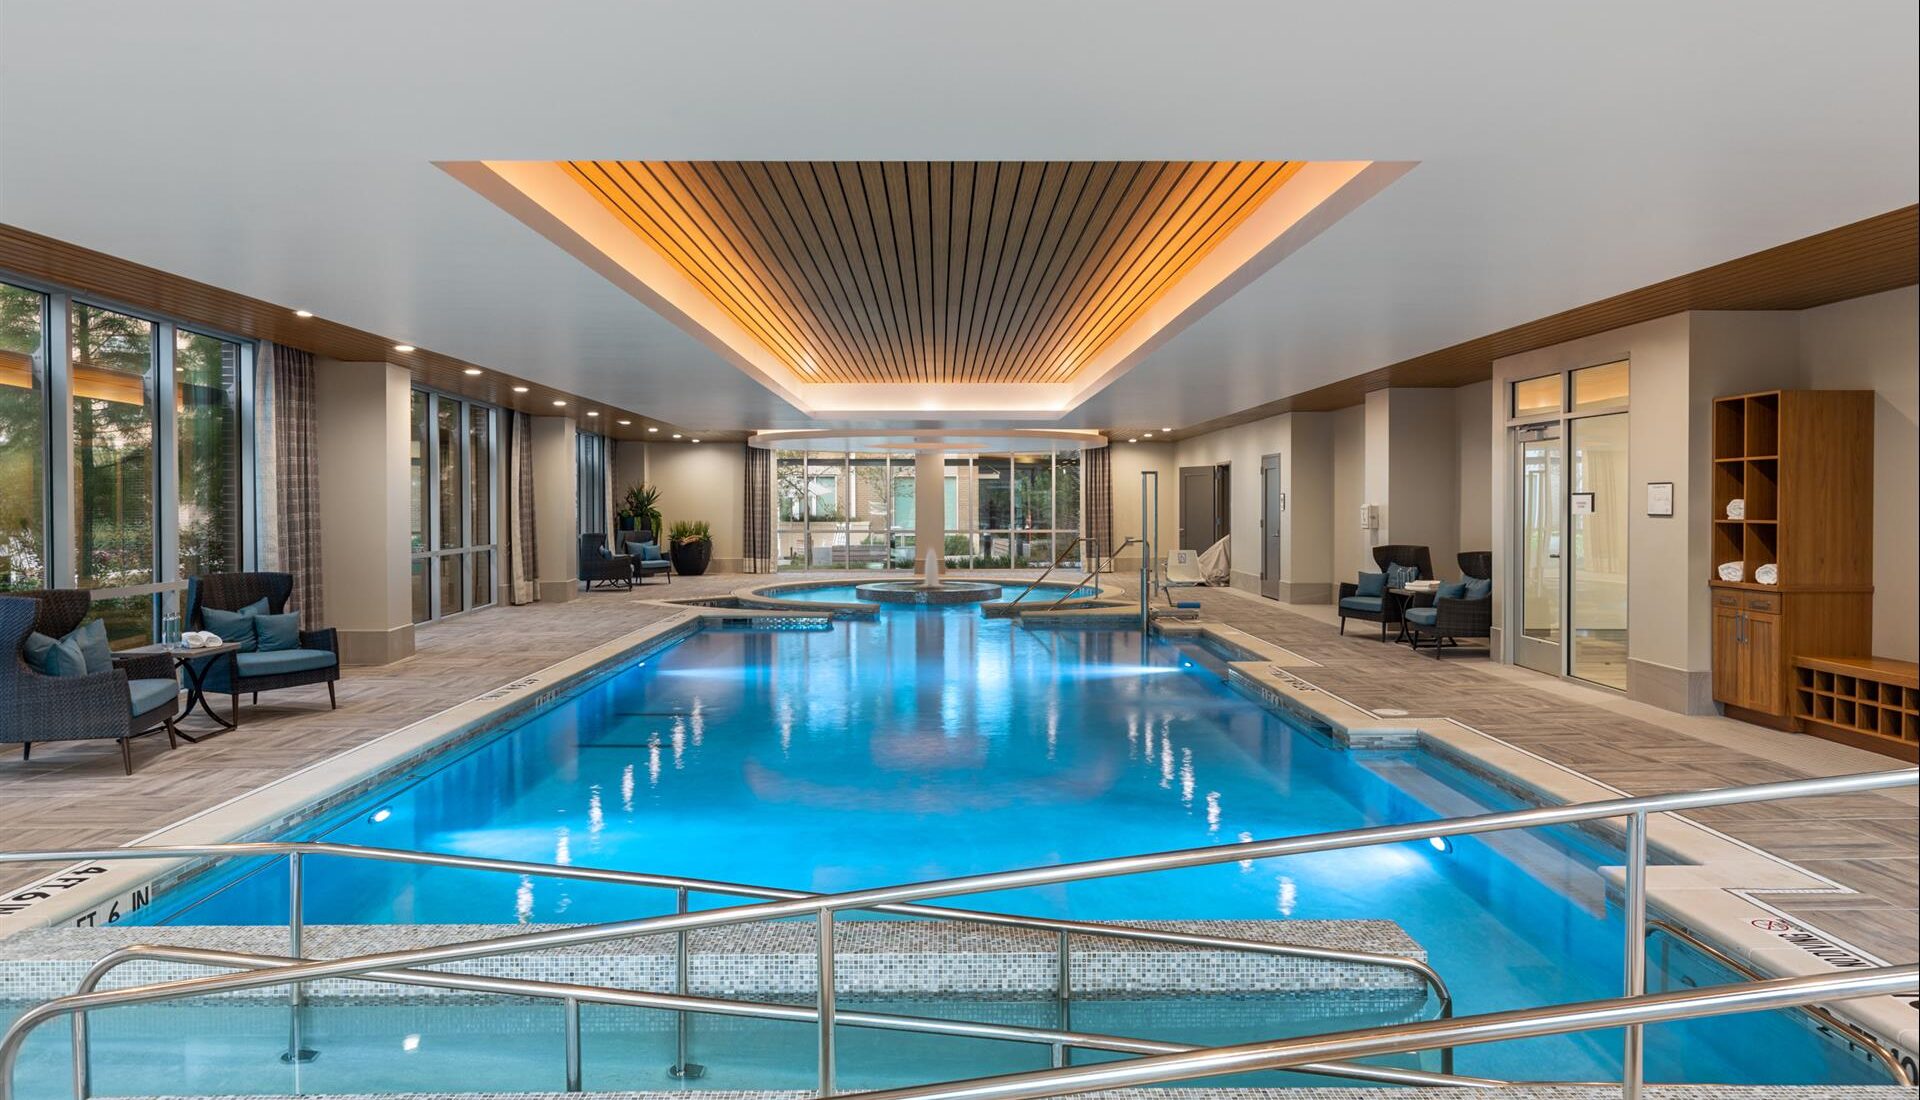 Indoor swimming pool at The Vista in Dallas